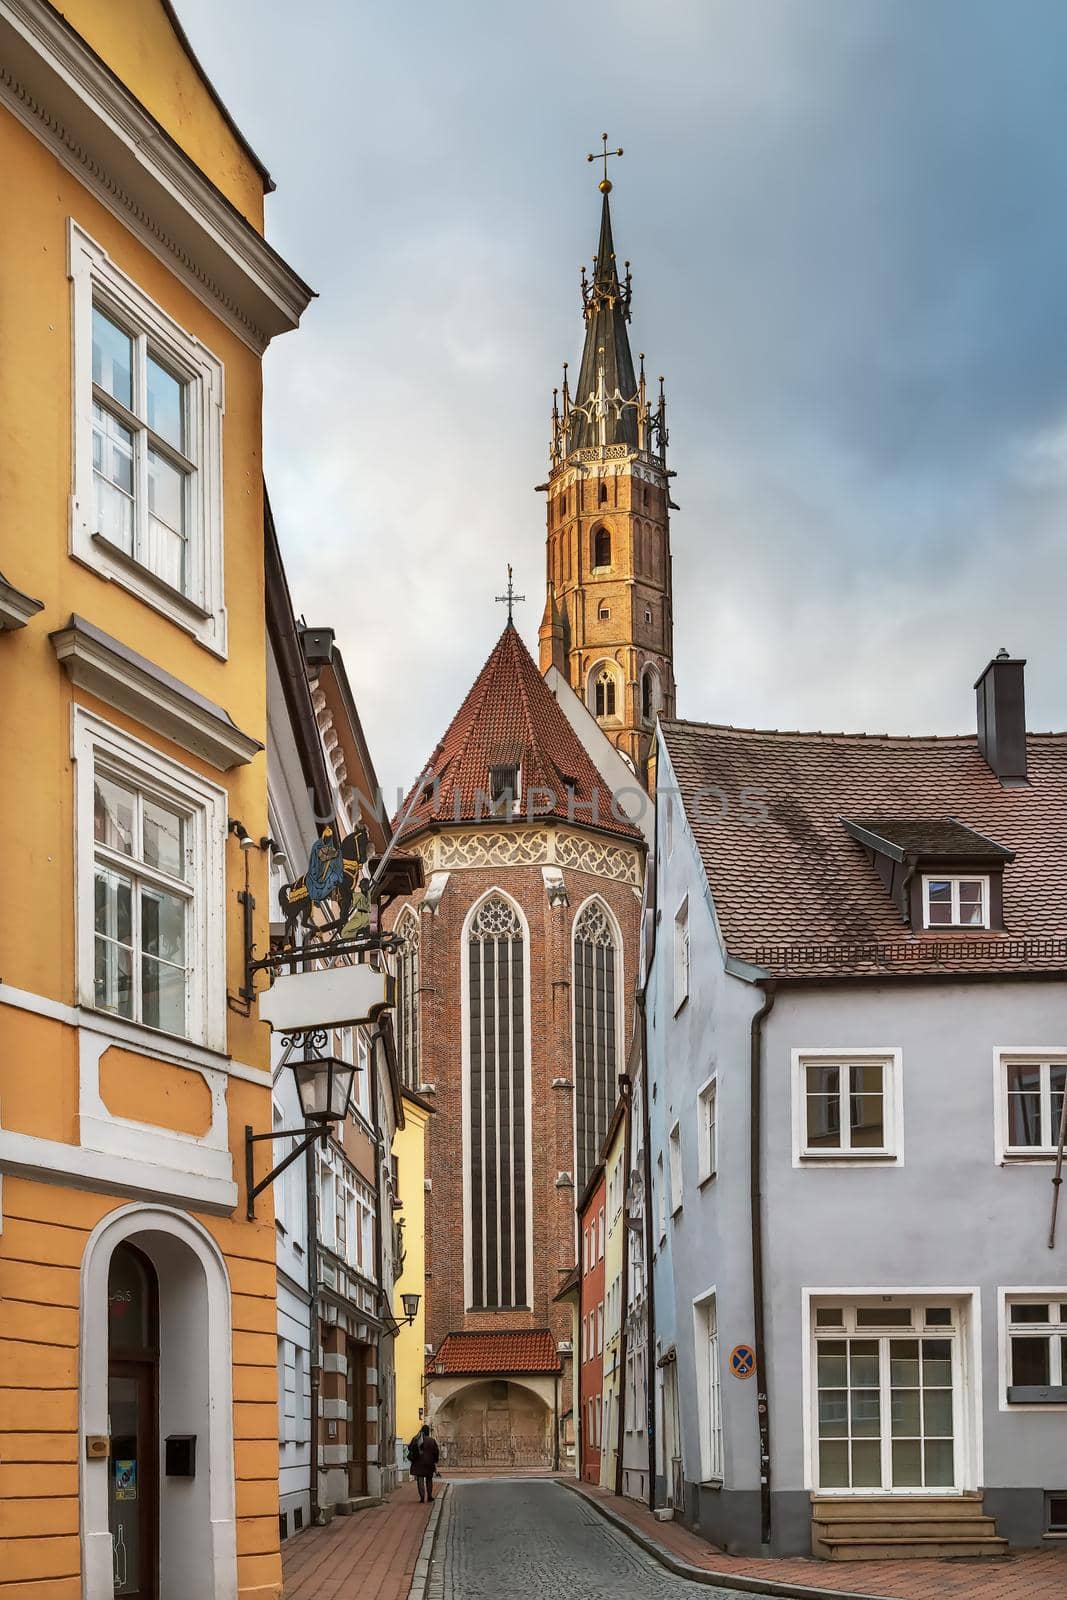 St. Martin Church, Landshut, Germany by borisb17